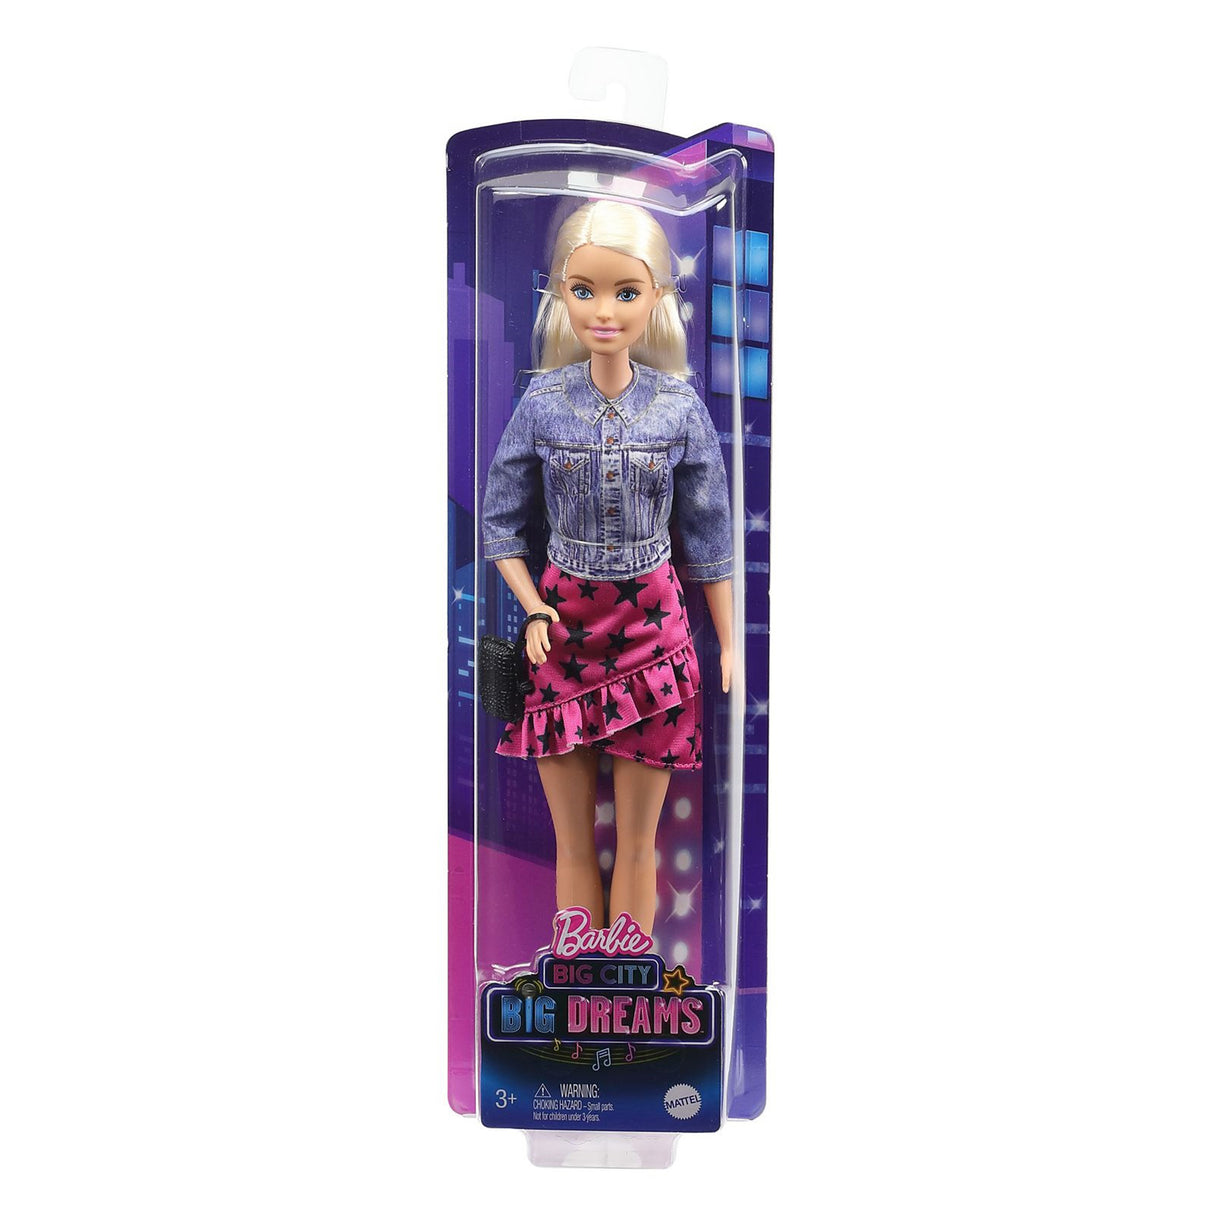 Barbie Big City Big Dreams Malibu Barbie Doll